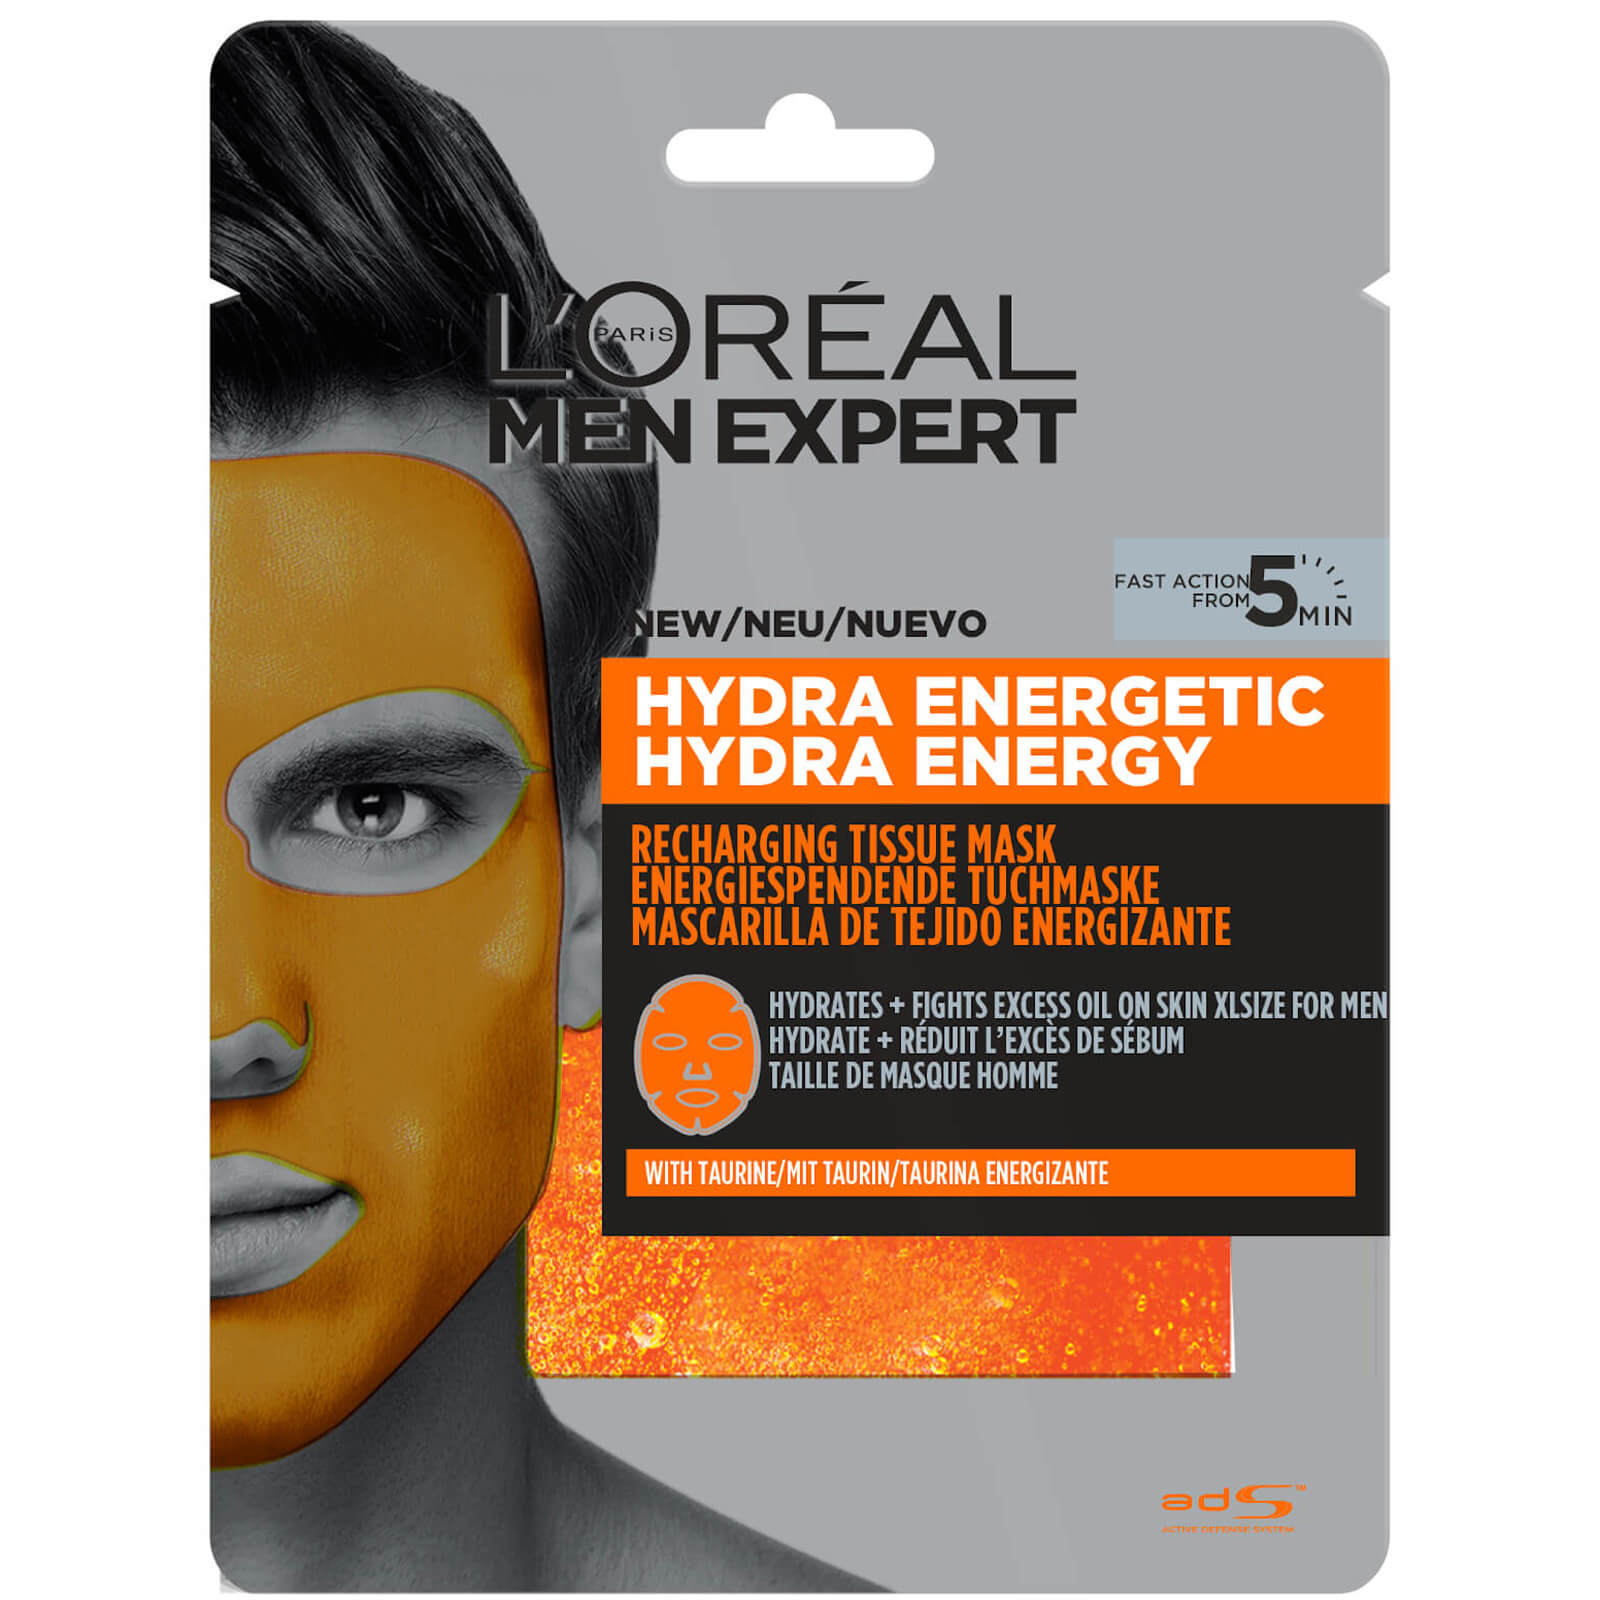 L'Oreal Paris Men Expert Hydra Energetic Tissue Mask 30g